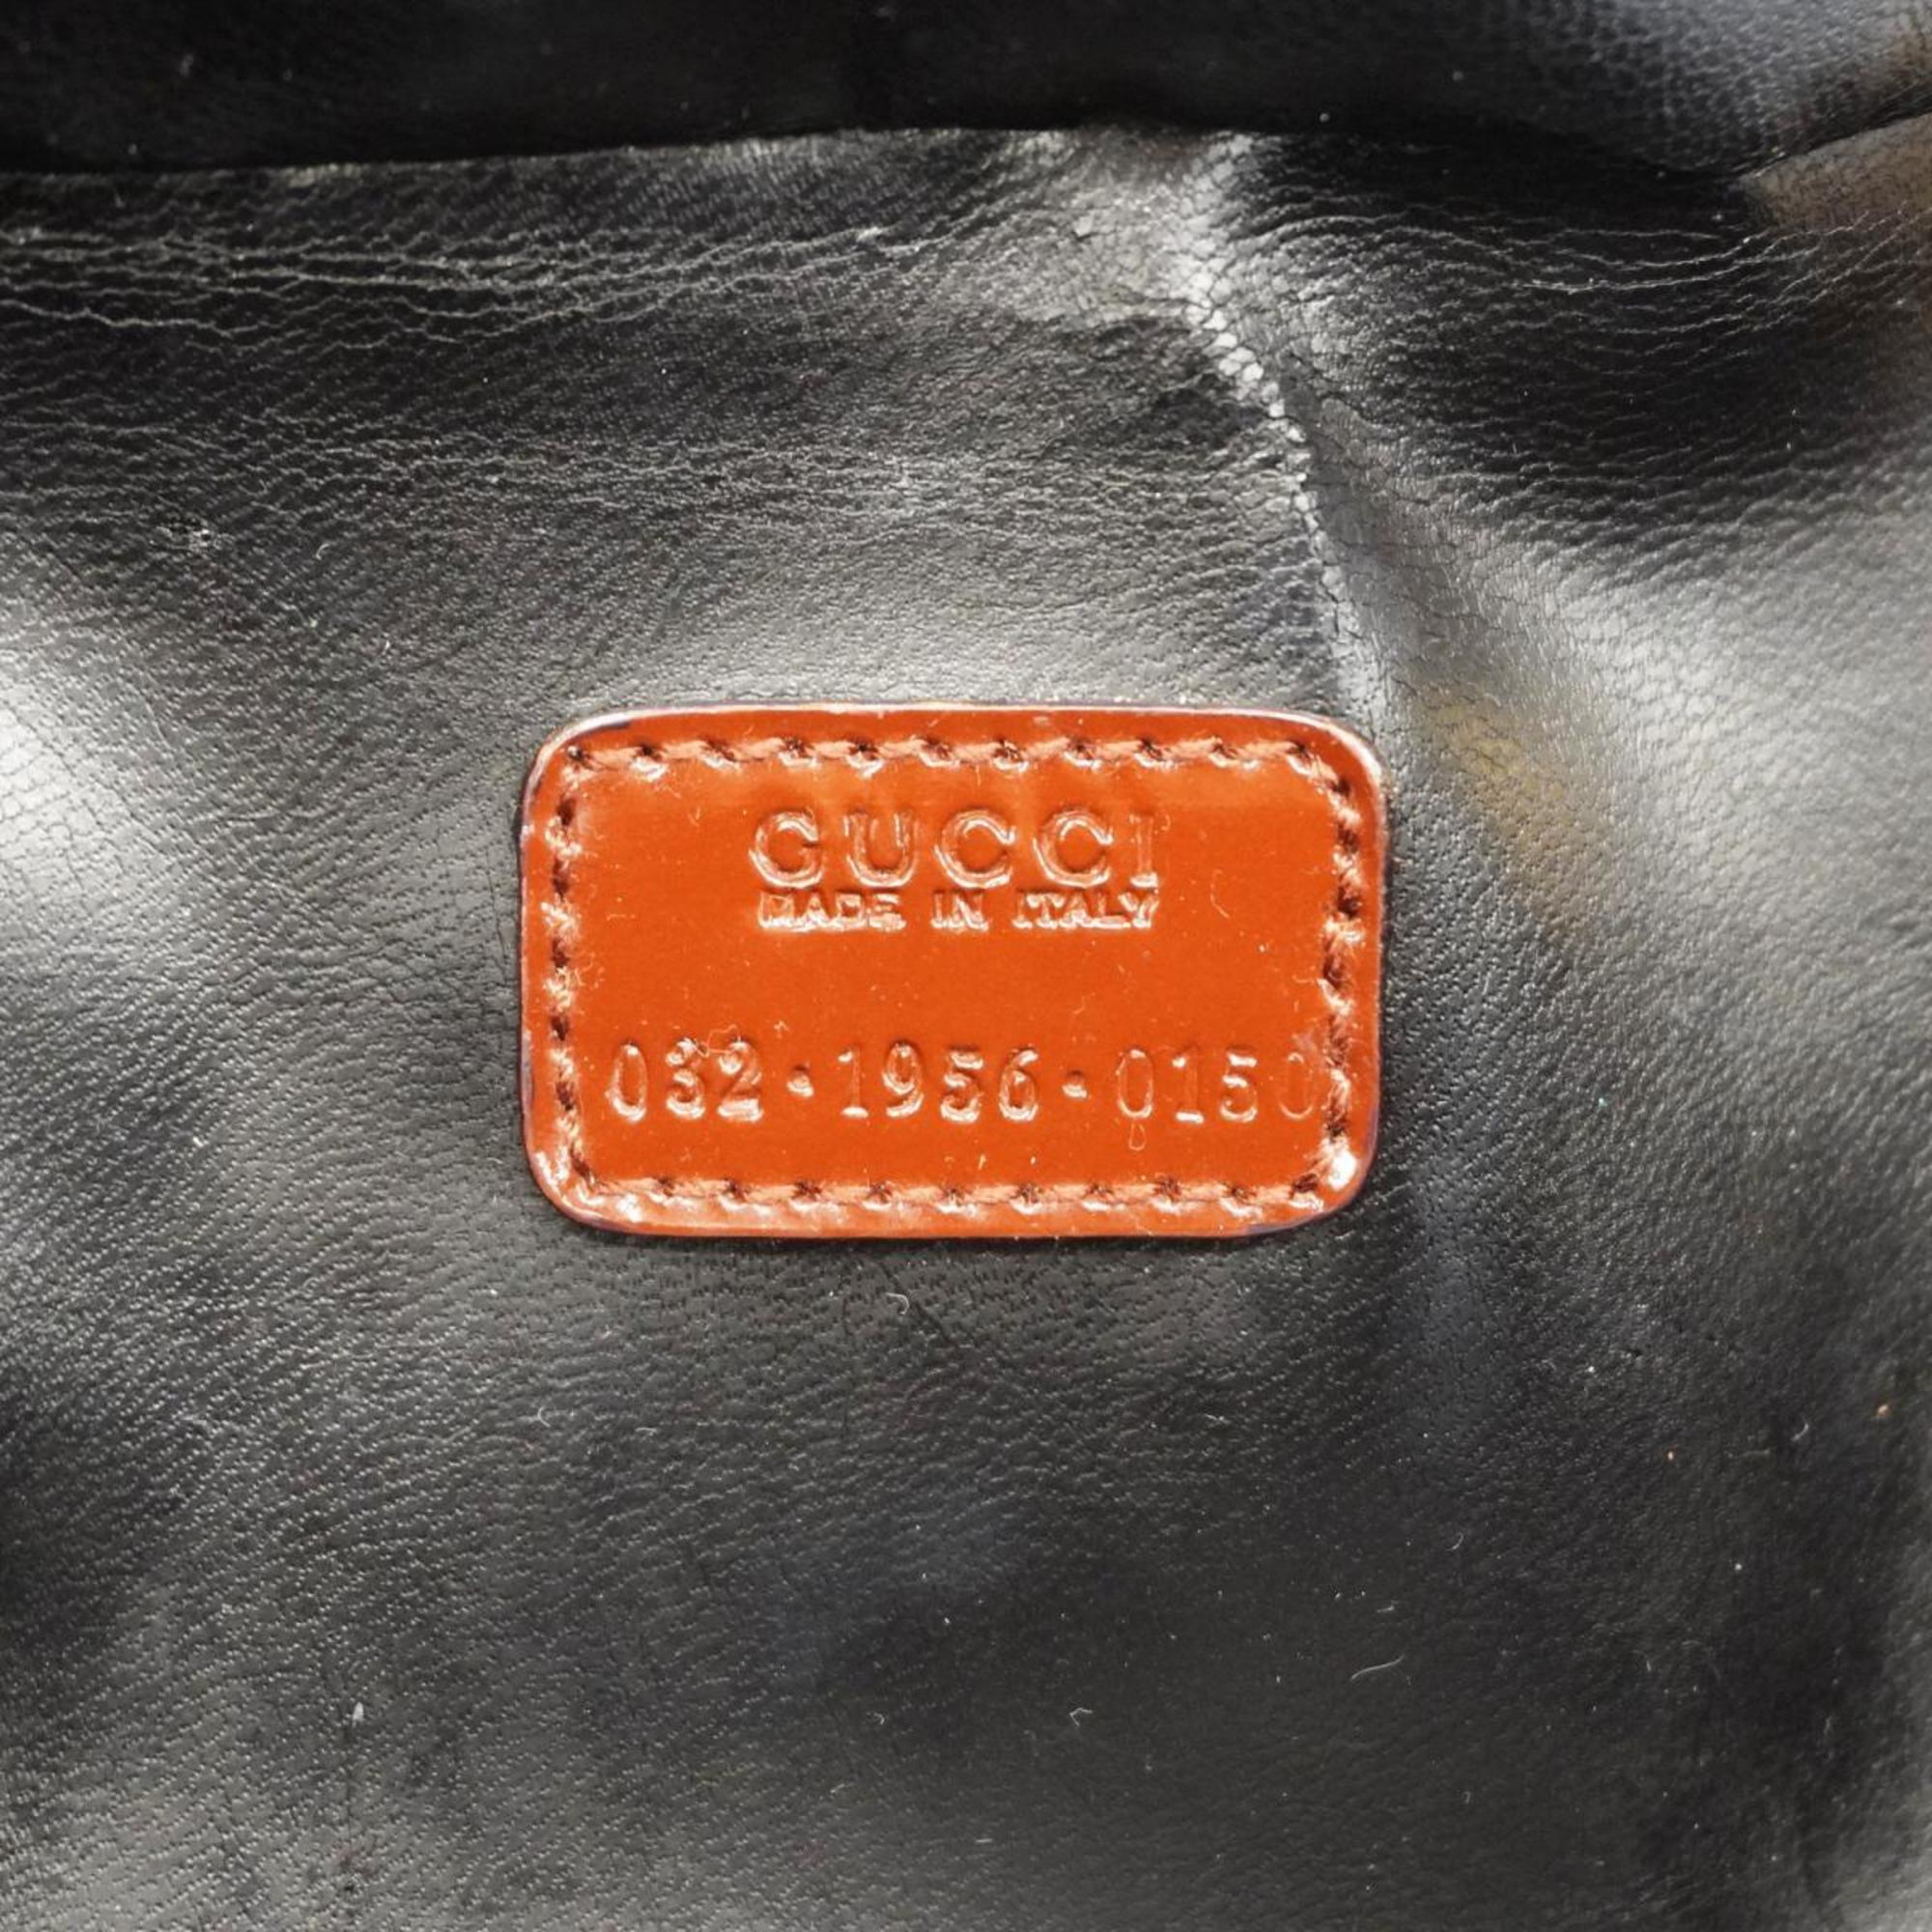 Gucci Vanity Bag Bamboo 032 1956 0150 Patent Brown Women's